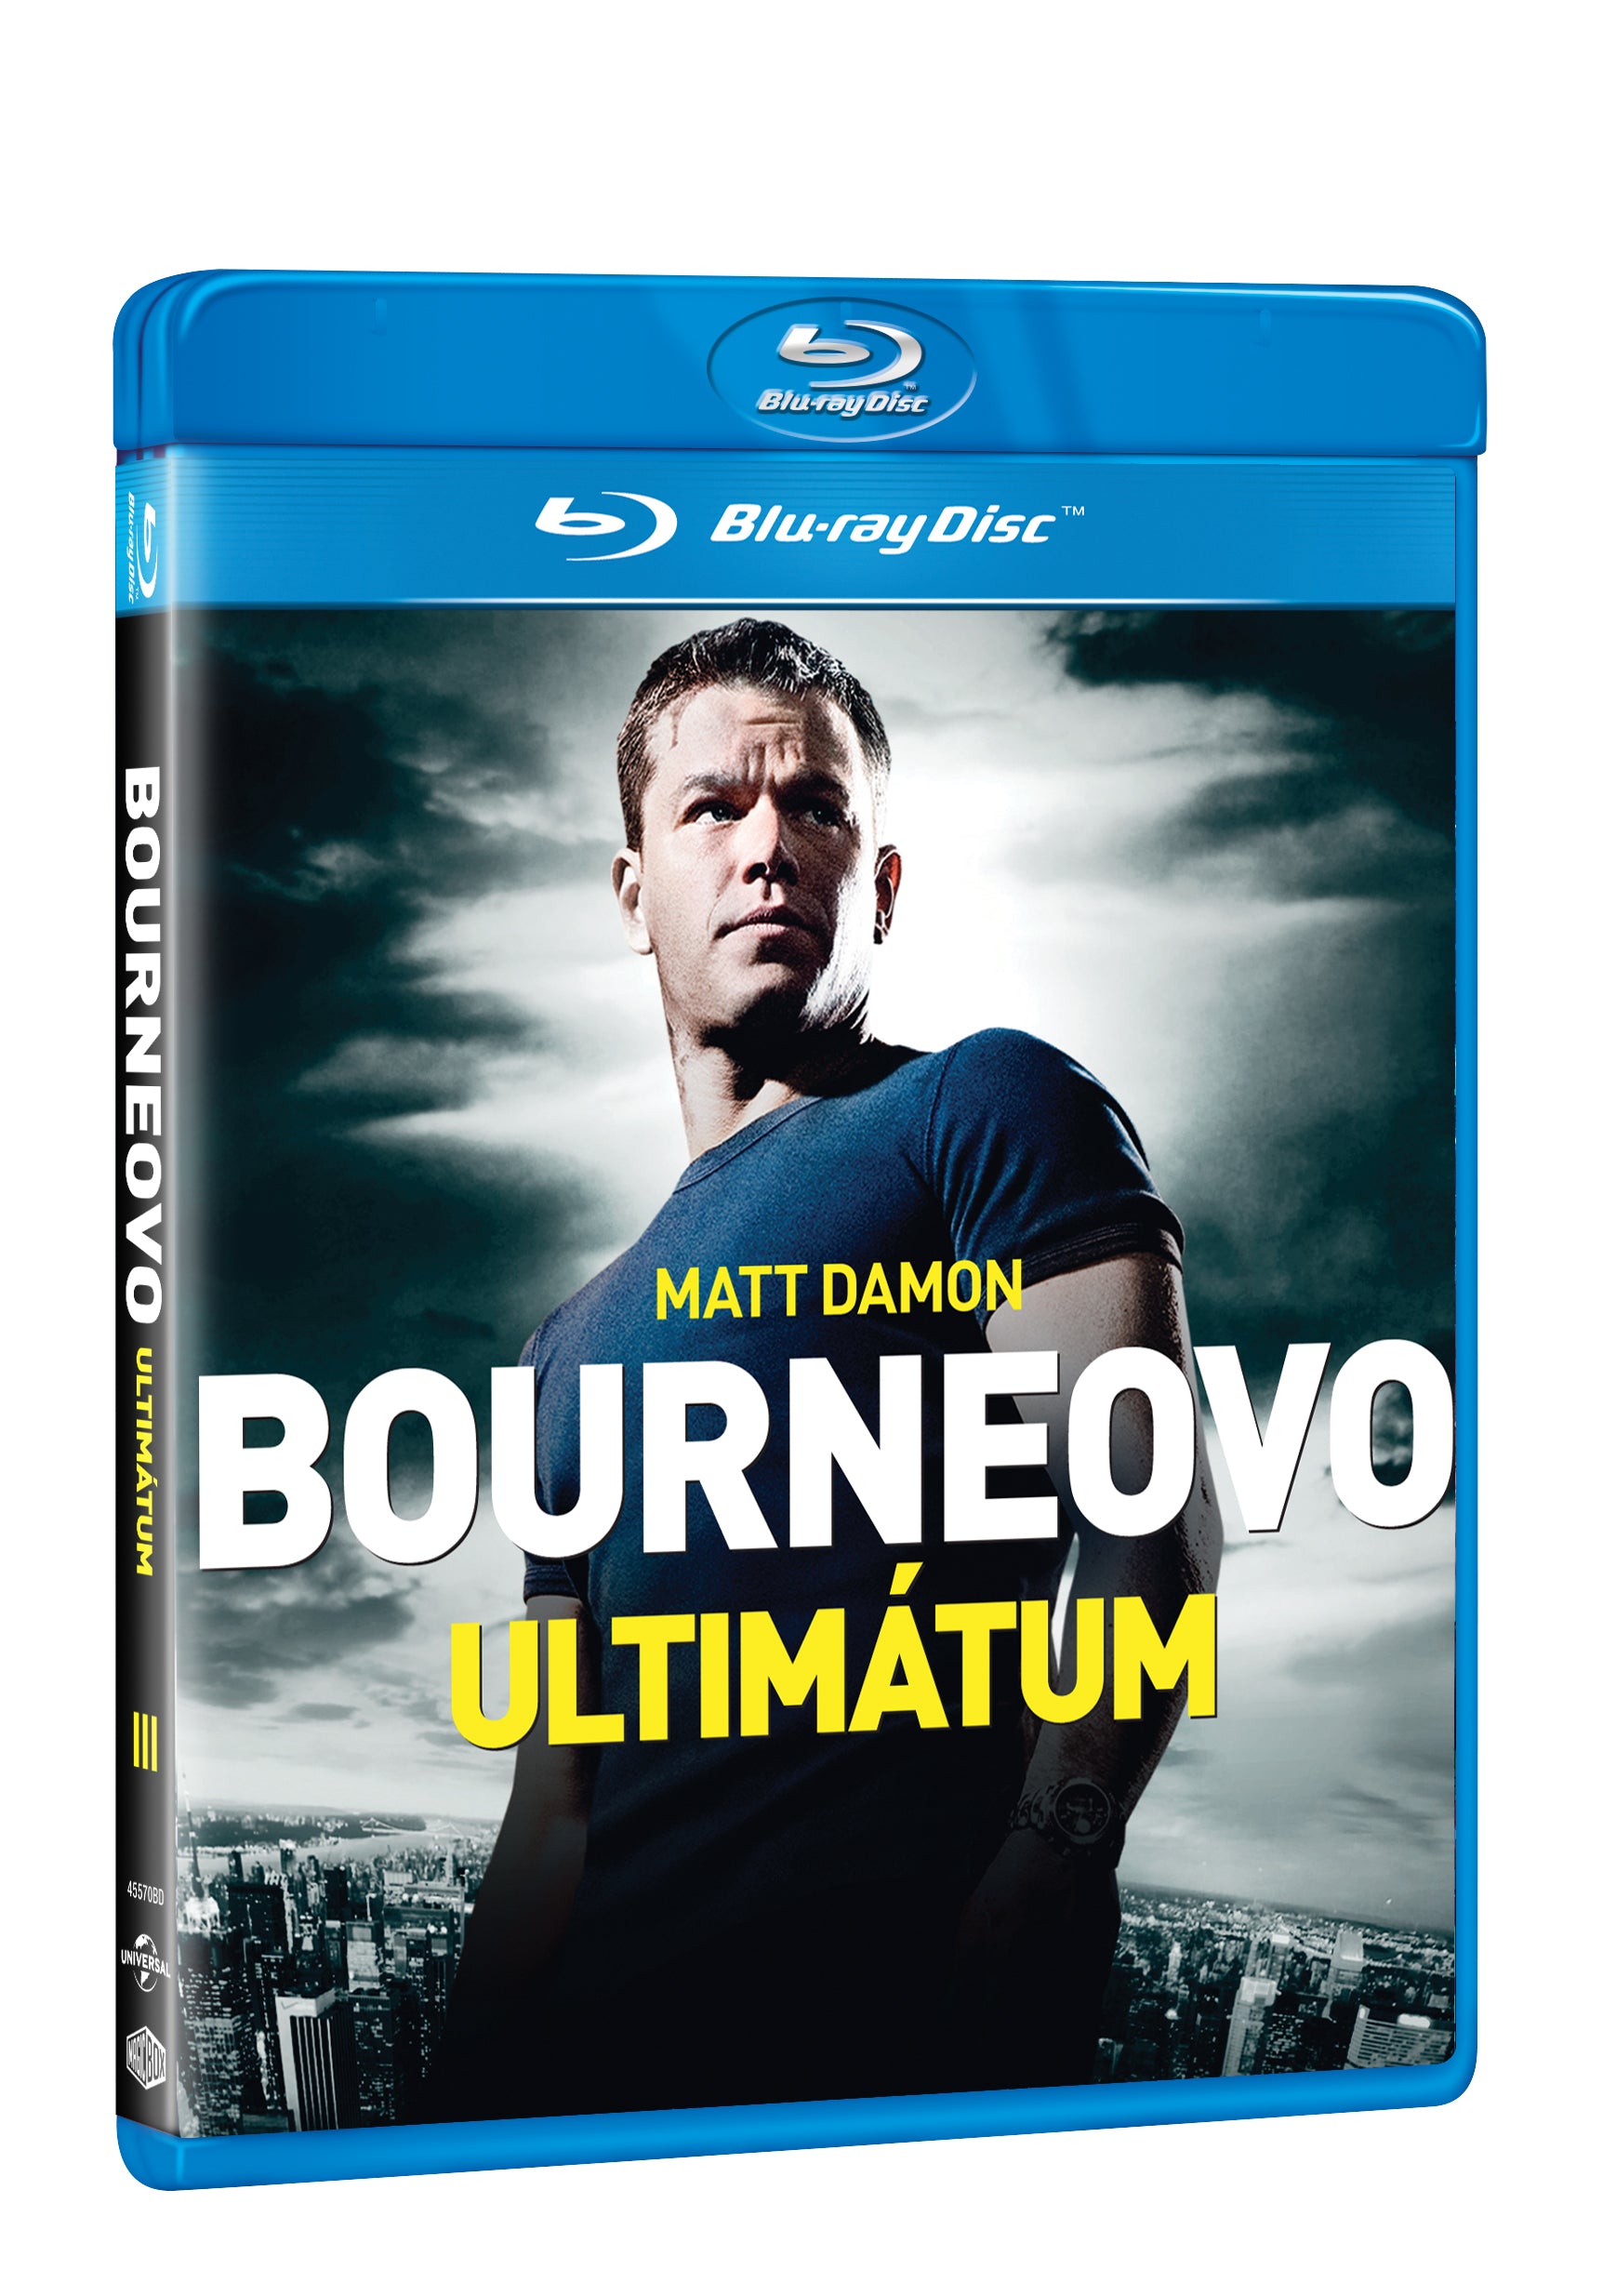 Bourneovo ultimatum BD / The Bourne Ultimatum - Czech version